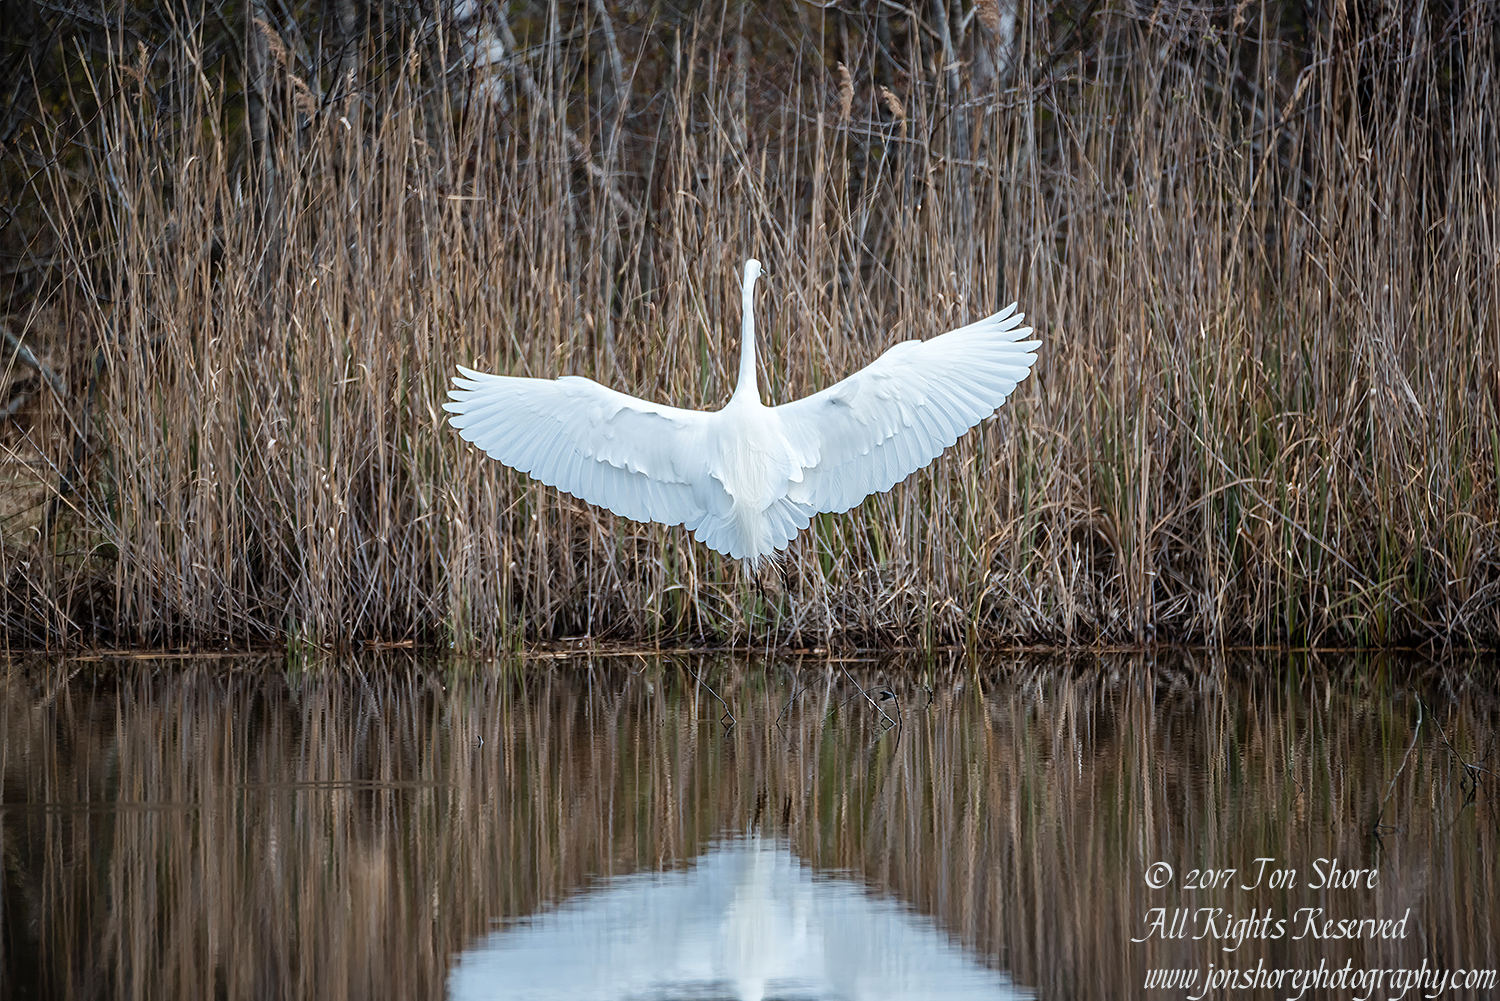 Great White Egret. Tamron 600mm